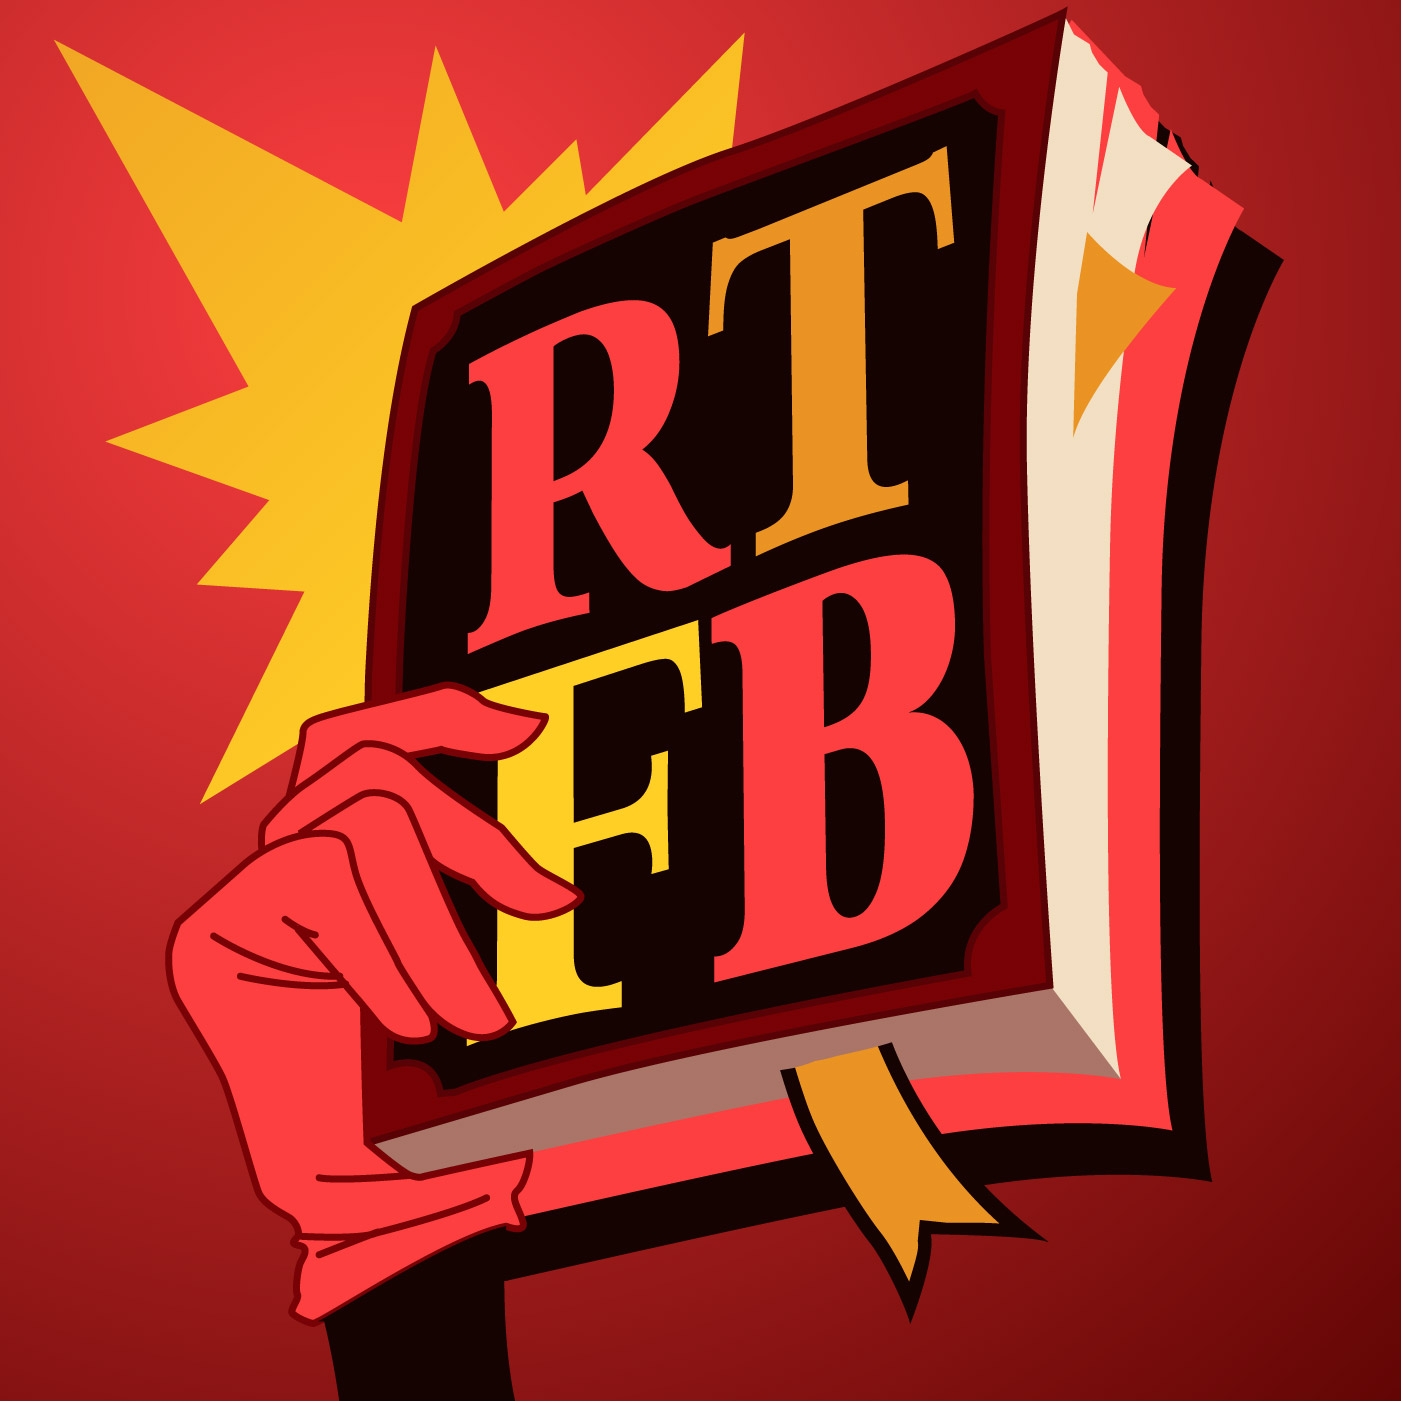 RTFB: Episode 13 - Uprooted